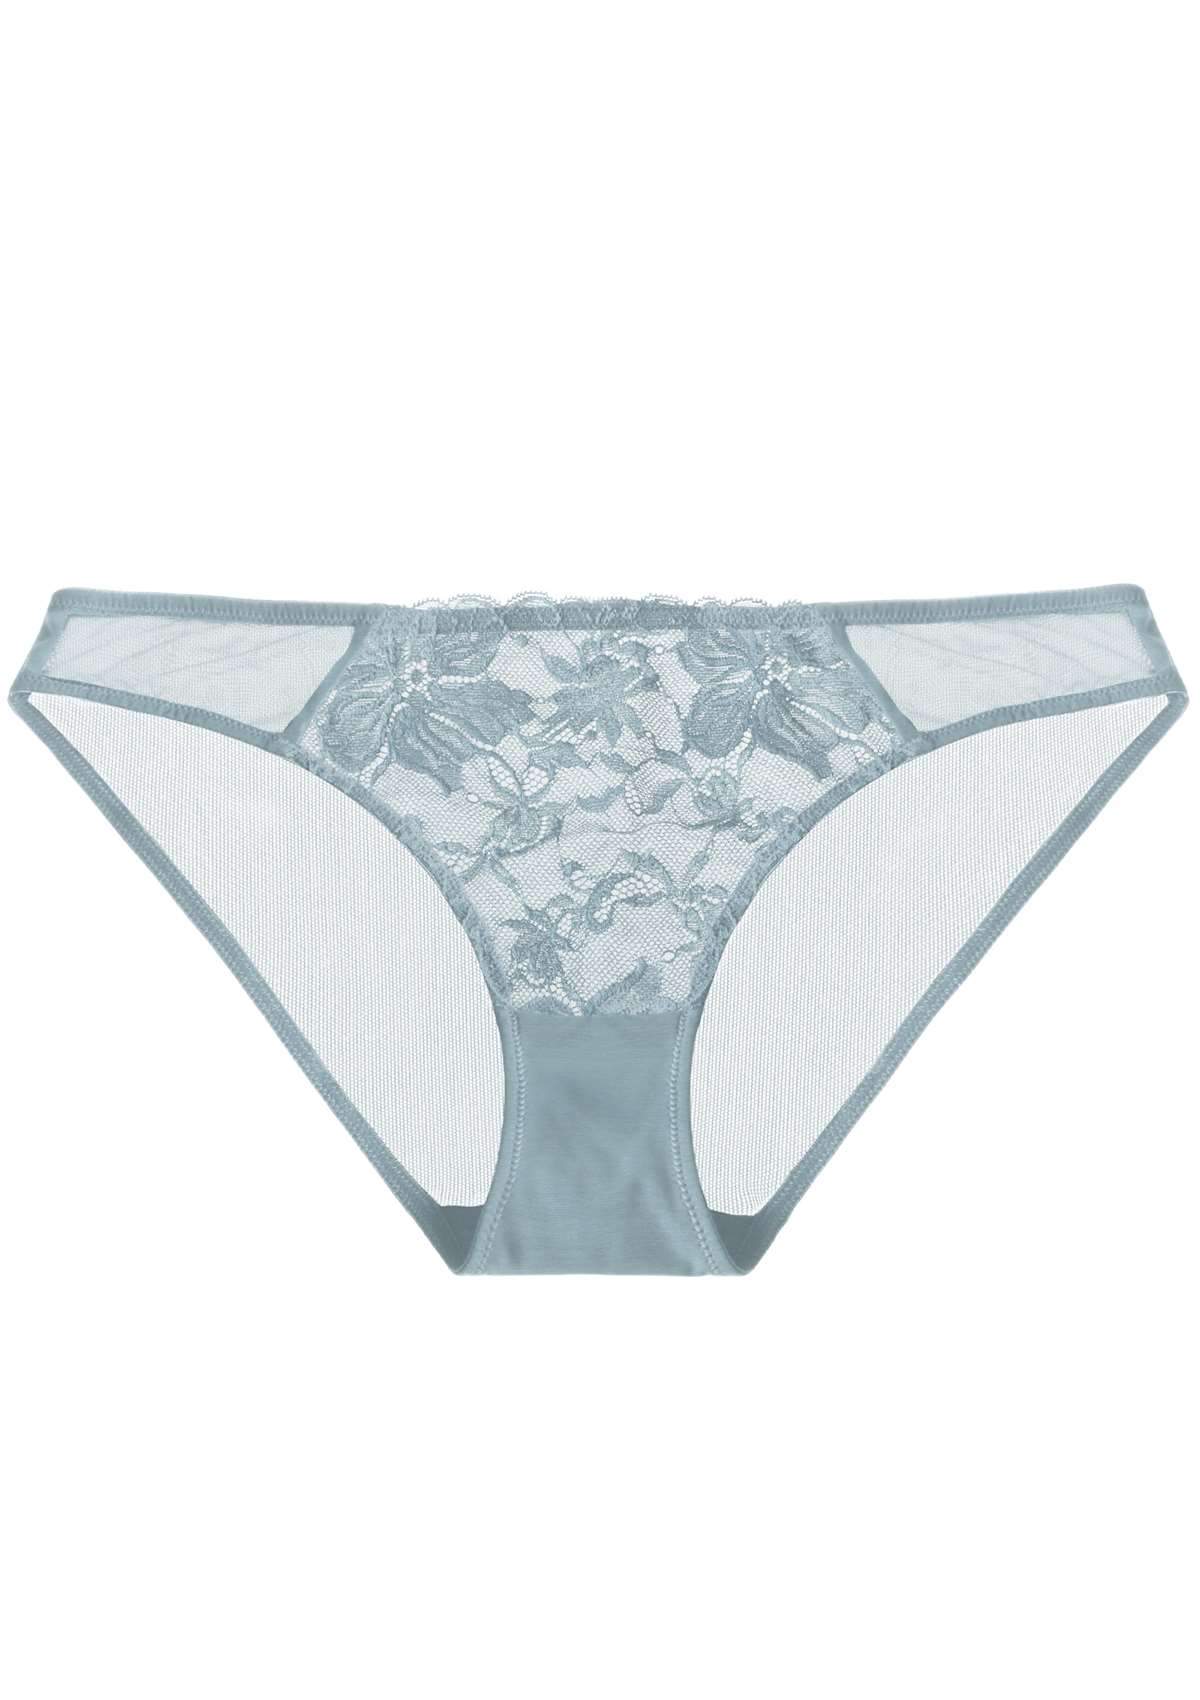 HSIA Breathable Sexy Feminine Lace Mesh Bikini Underwear - XL / Blue